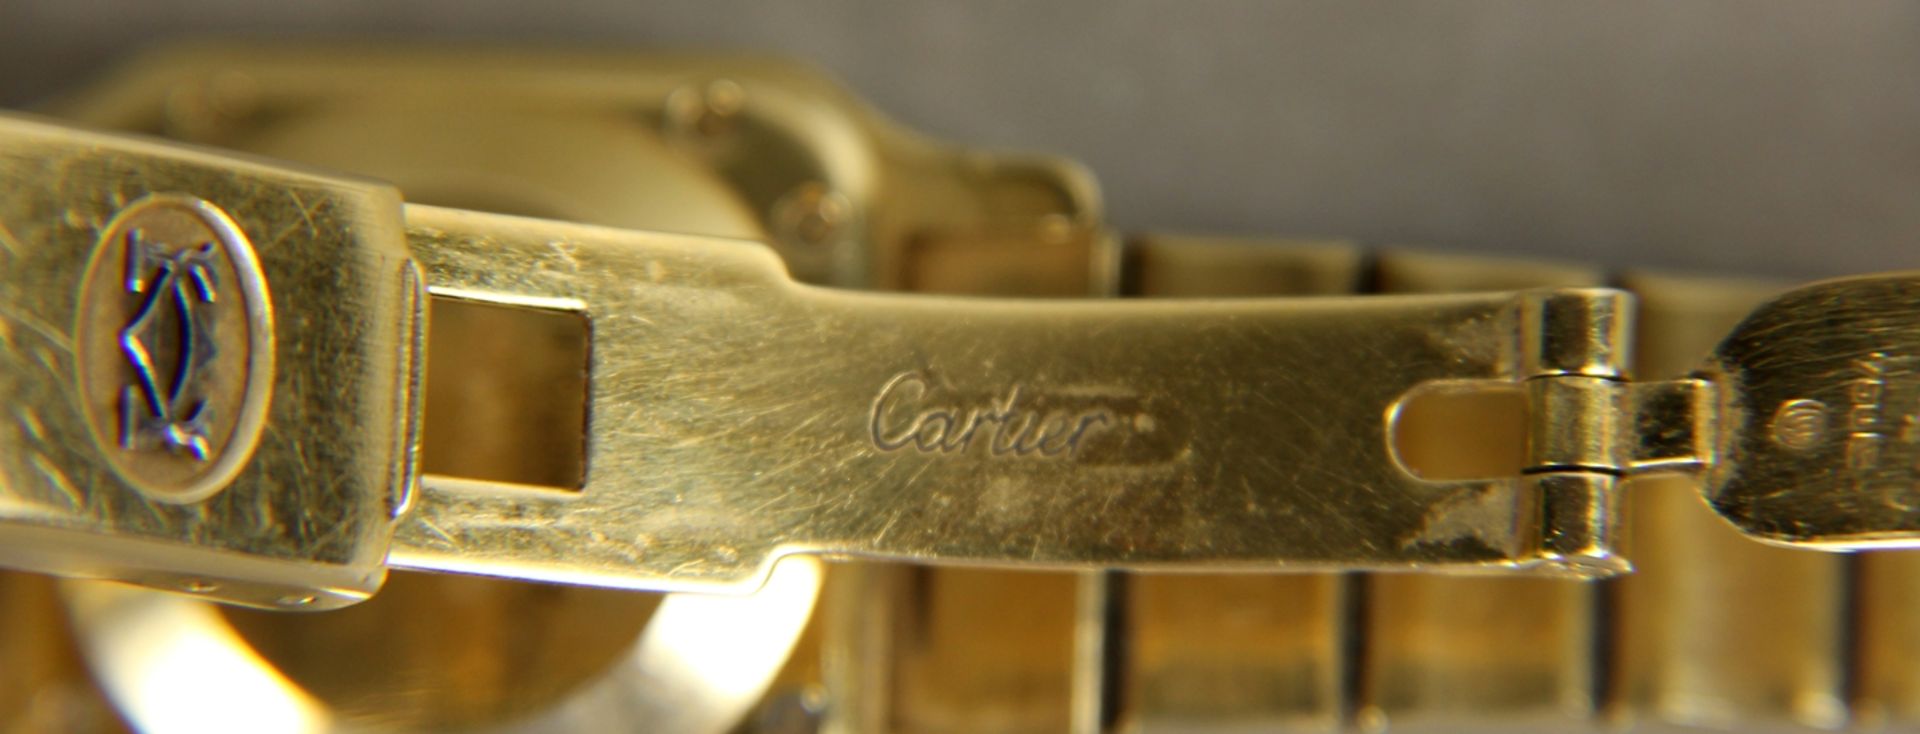 Cartier-Damenarmbanduhr - Bild 4 aus 7